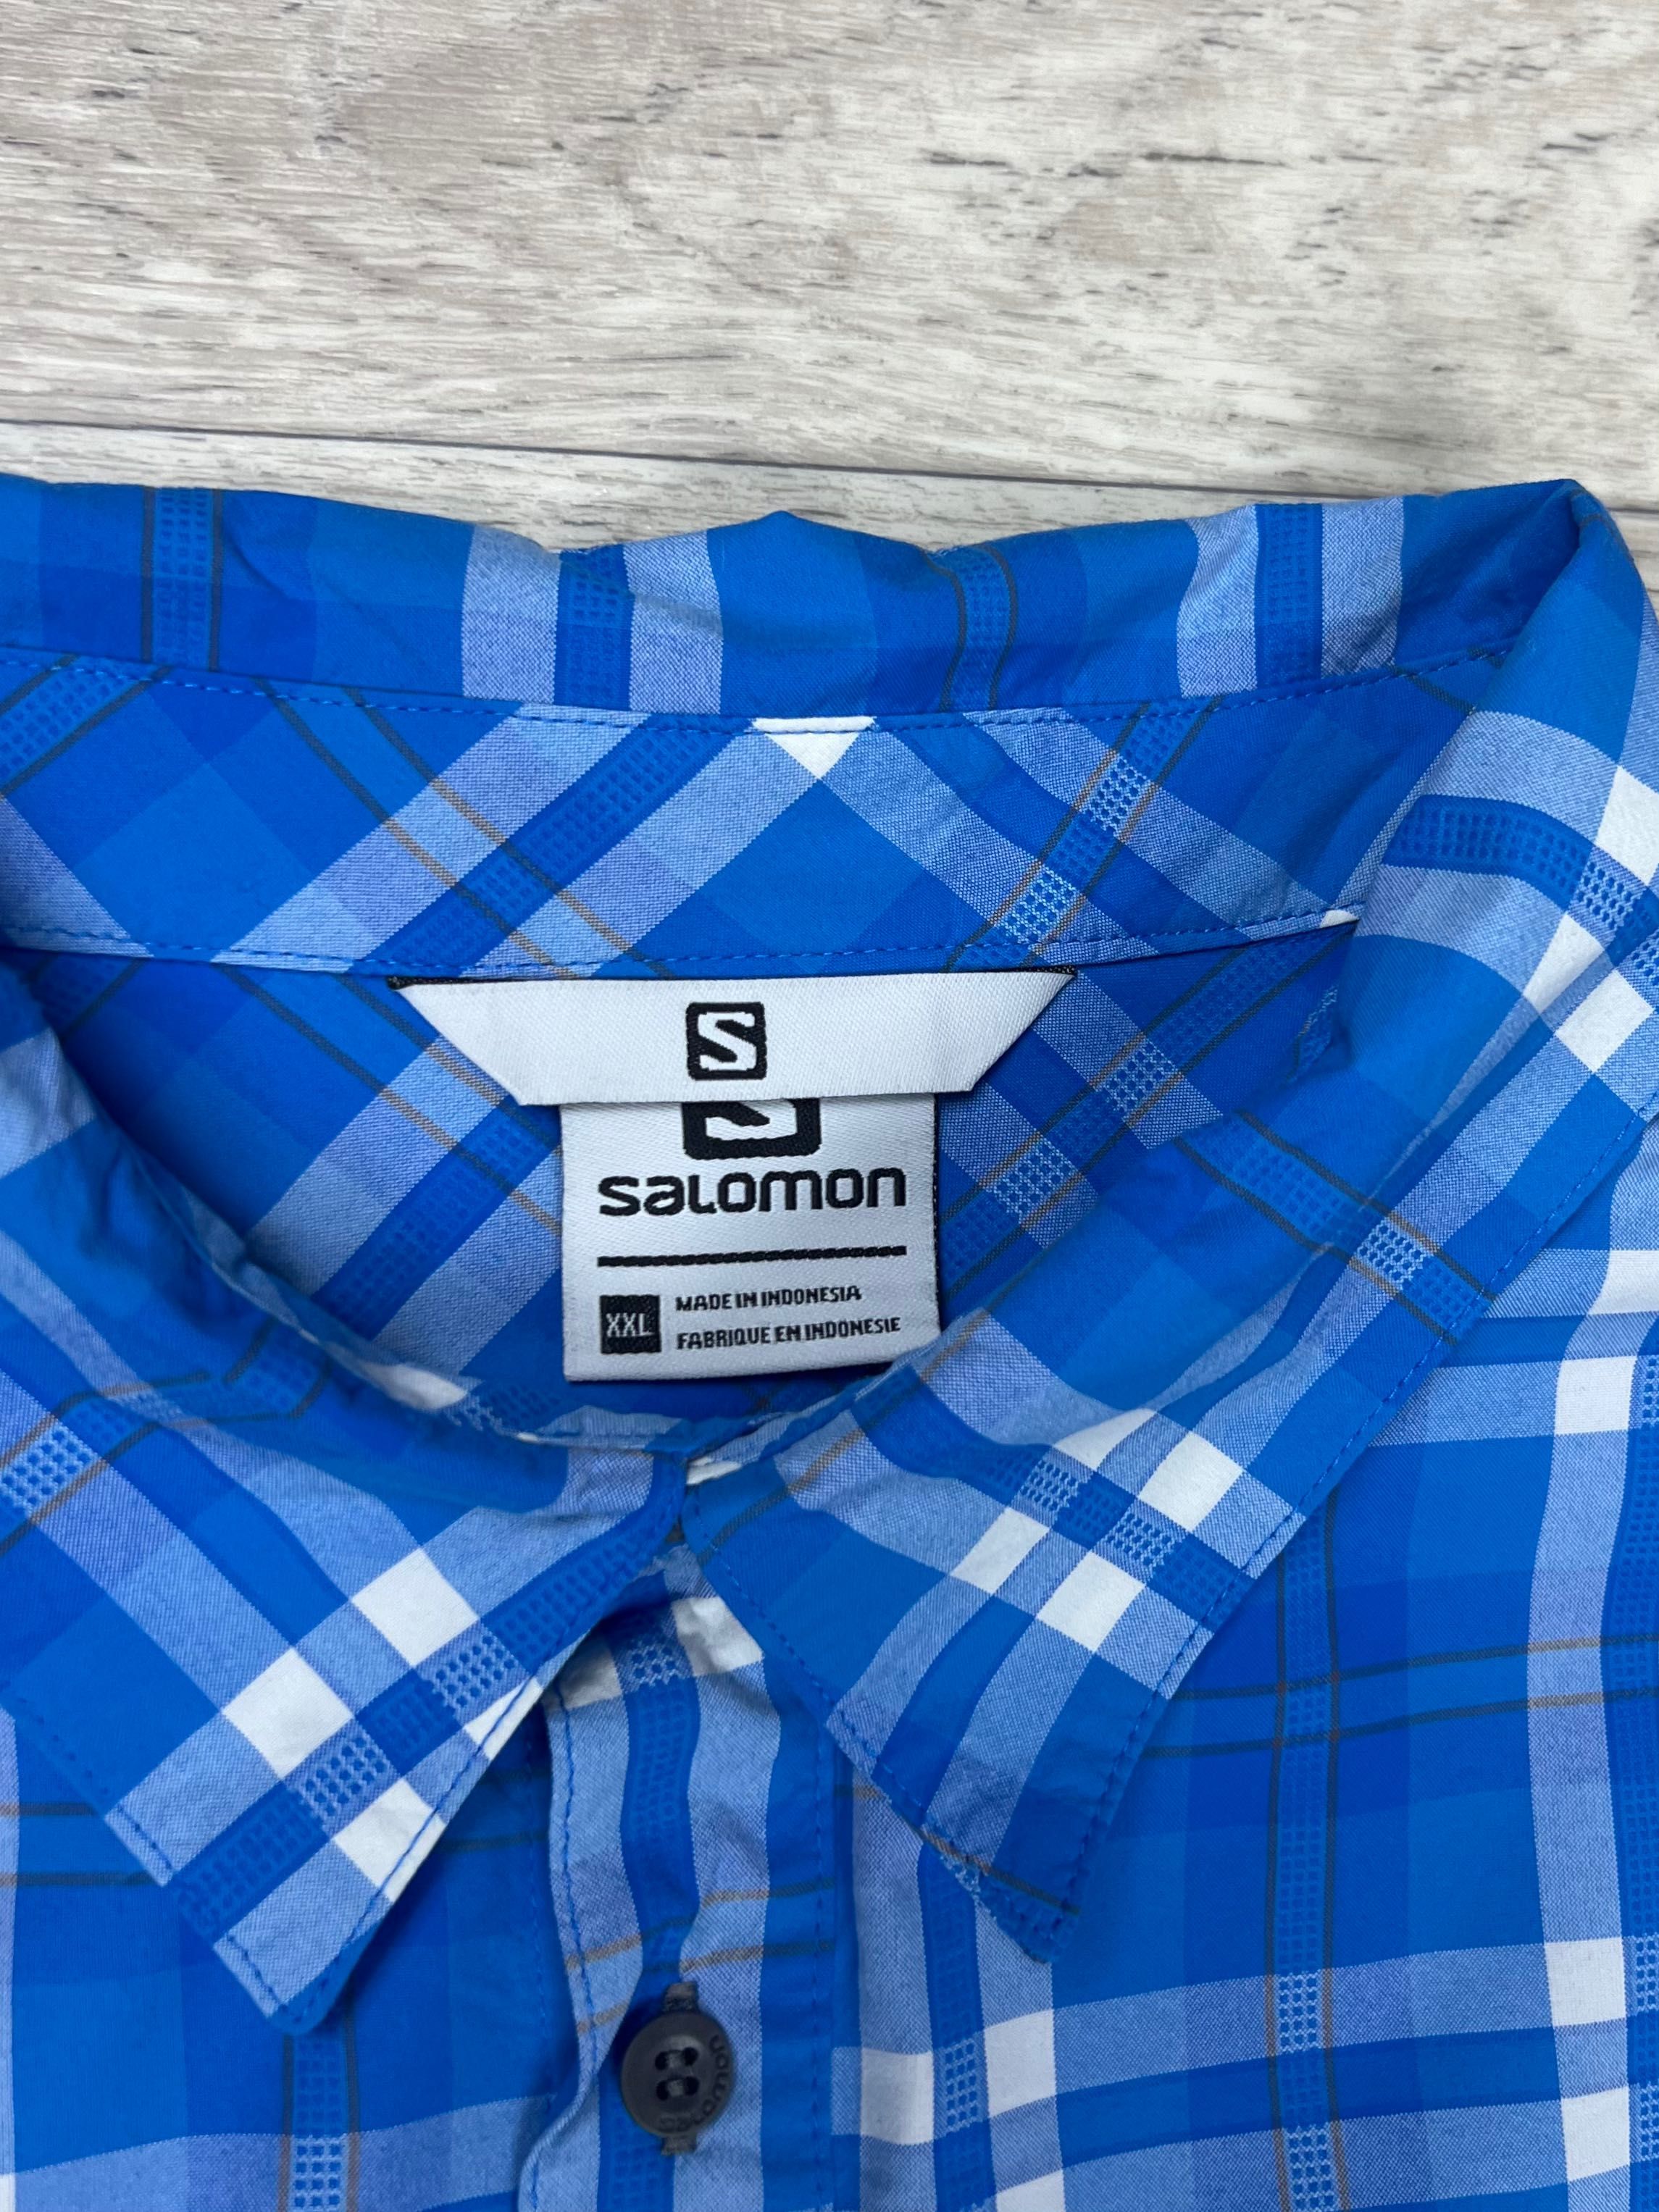 Salomon рубашка 2xl размер с коротким рукавом клетчатая синяя оригинал